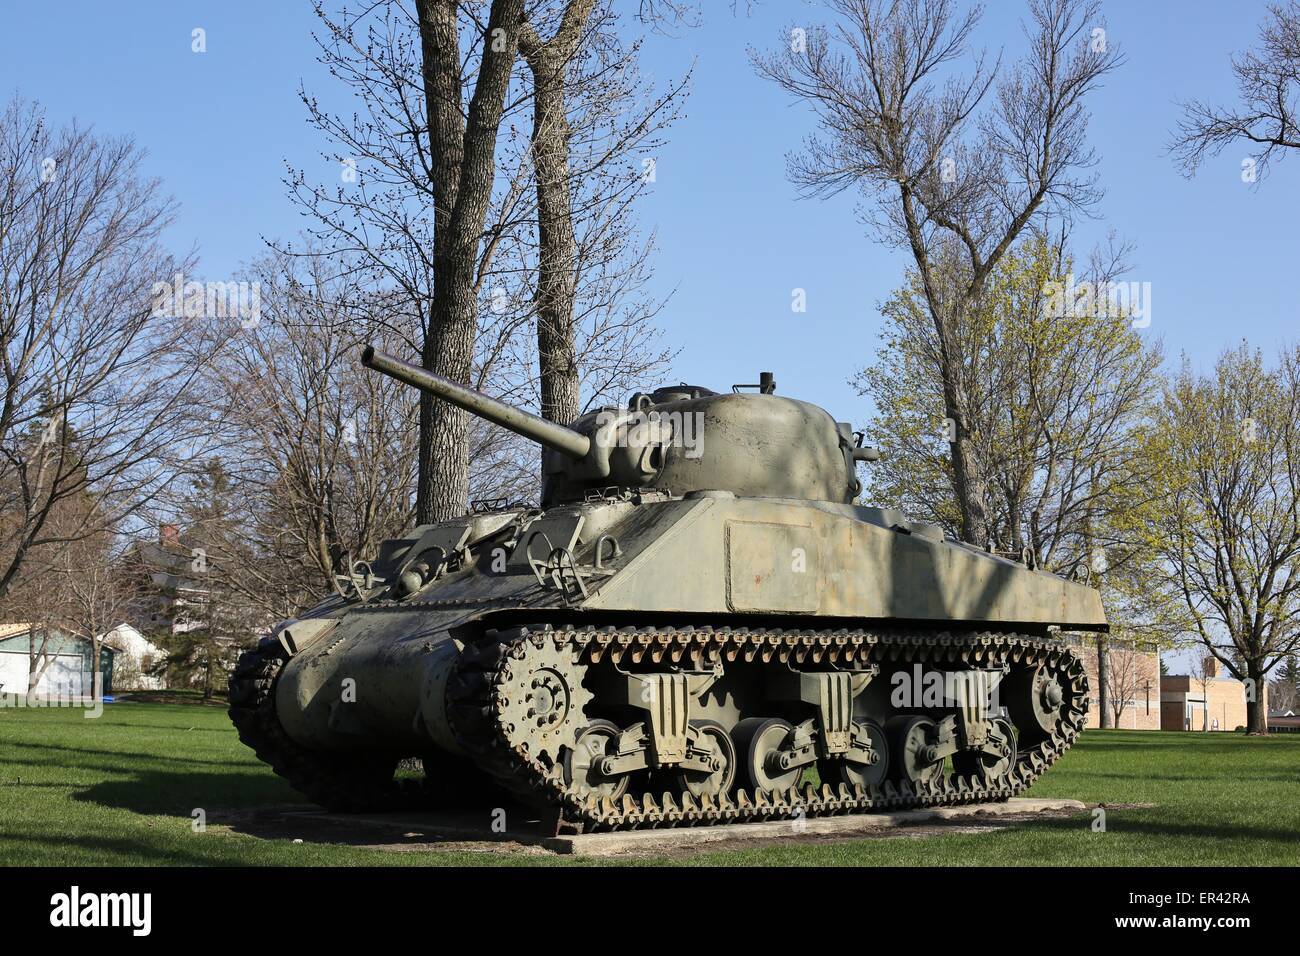 An army tank on display in Pipestone, Minnesota. Stock Photo